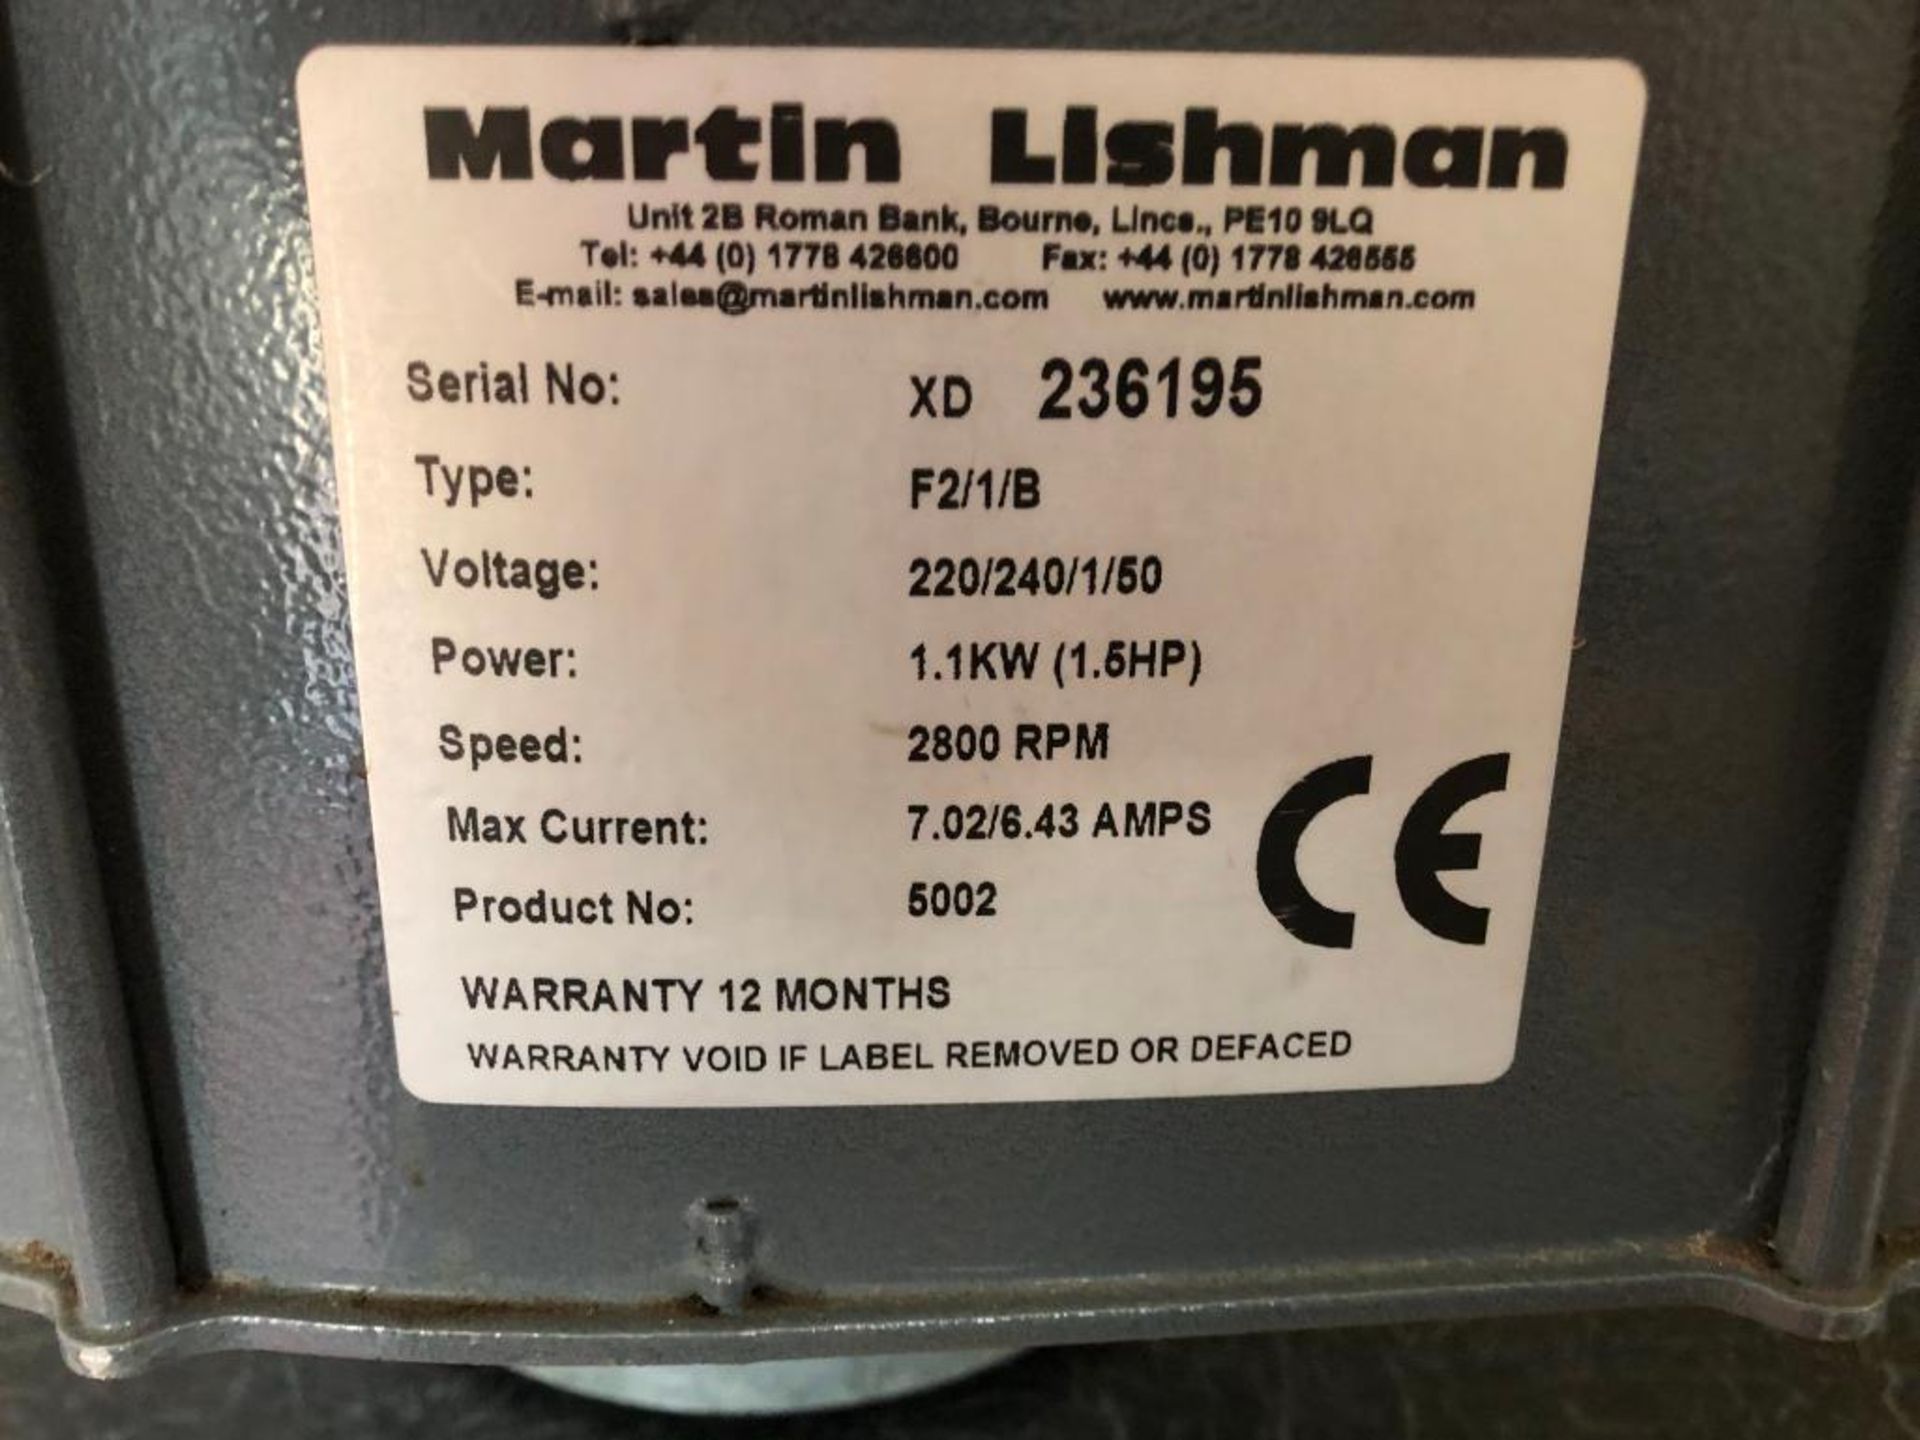 Martin Lishman F2/1/B grain fan, single phase - Image 2 of 2